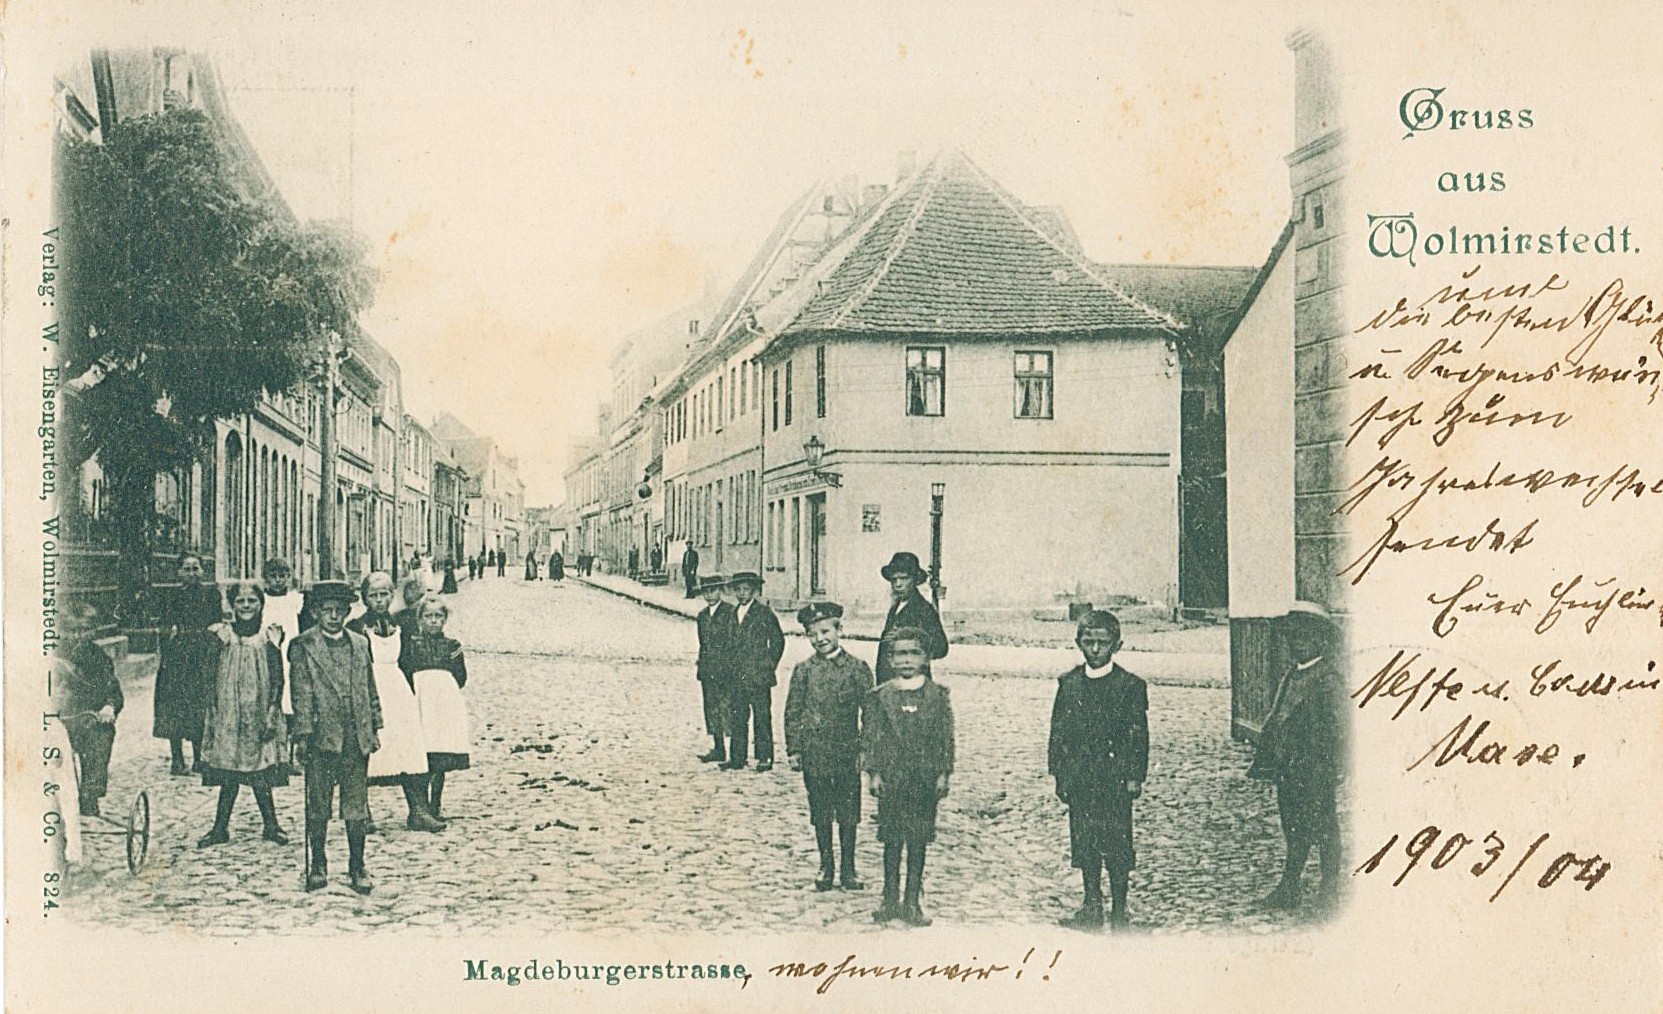 Ansichtskarte "Magdeburger Straße, Wolmirstedt", 1904 (Museum Wolmirstedt RR-F)